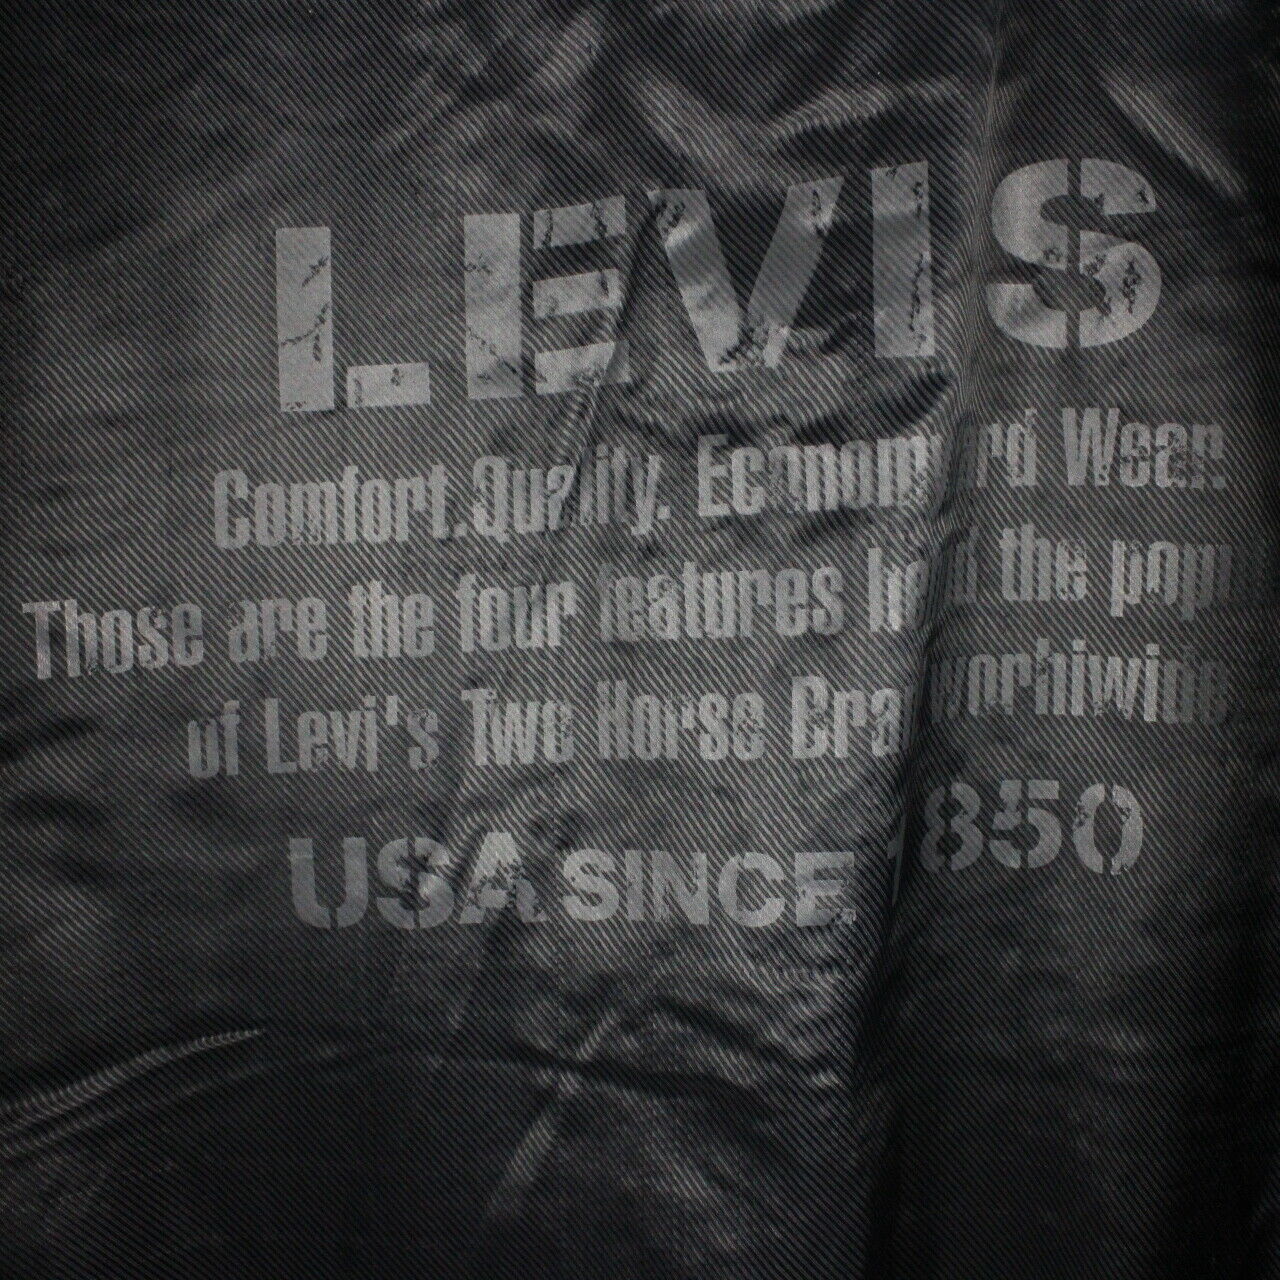 LEVIS Jacket Black | Medium